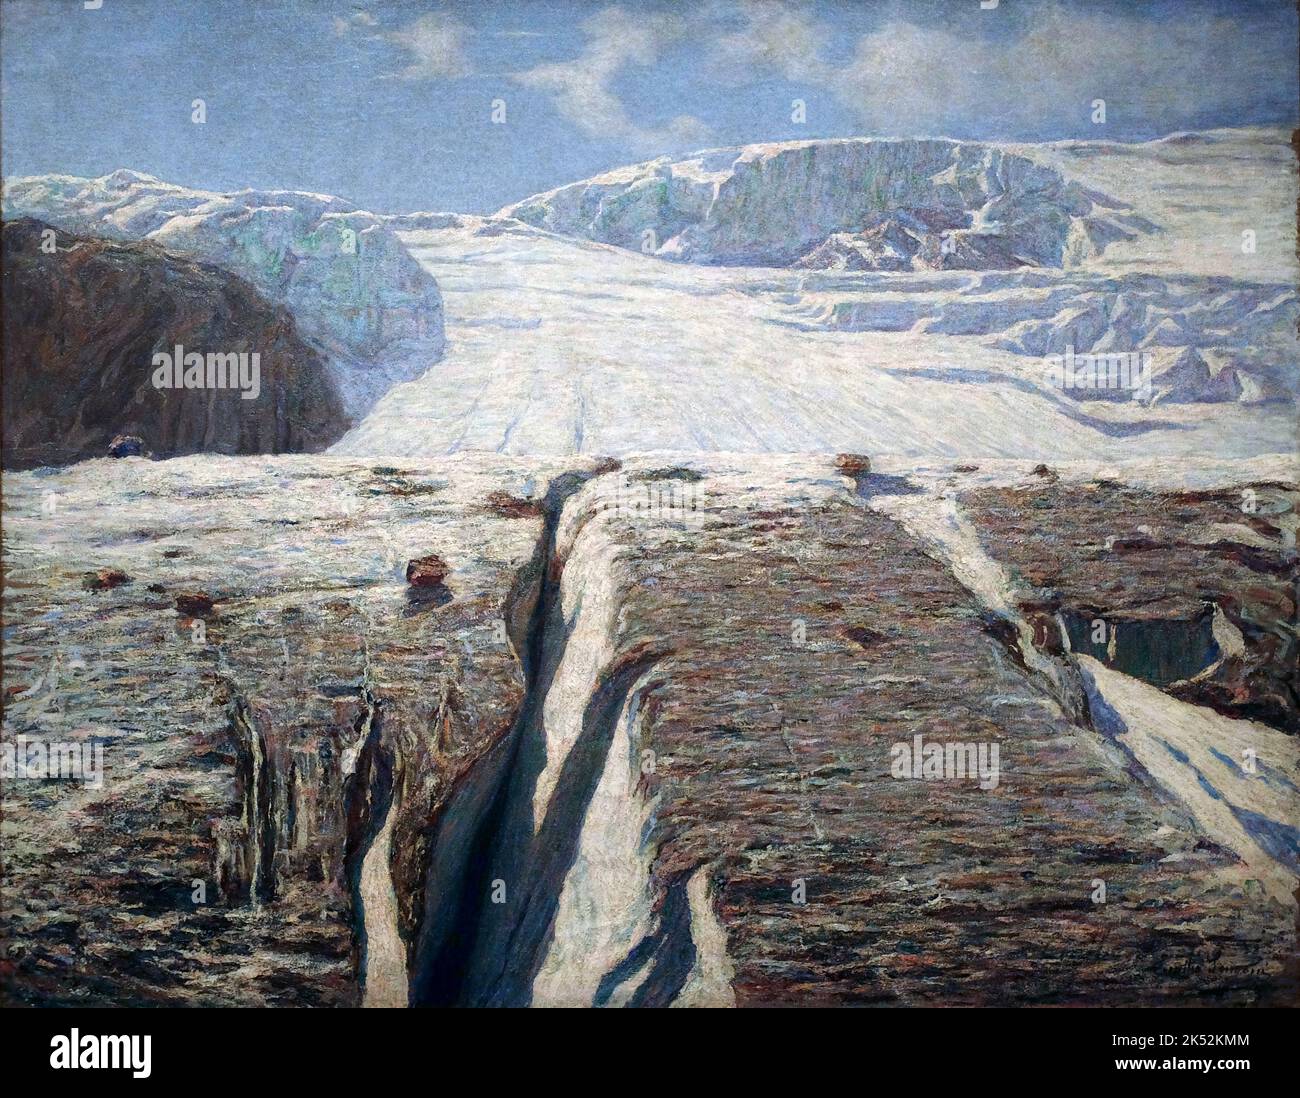 Ghiacciaio (Glacier) (1905) by Emilio Longoni (1859-1932). Oil on canvas, 156.5x200 cm. Private collection. Stock Photo